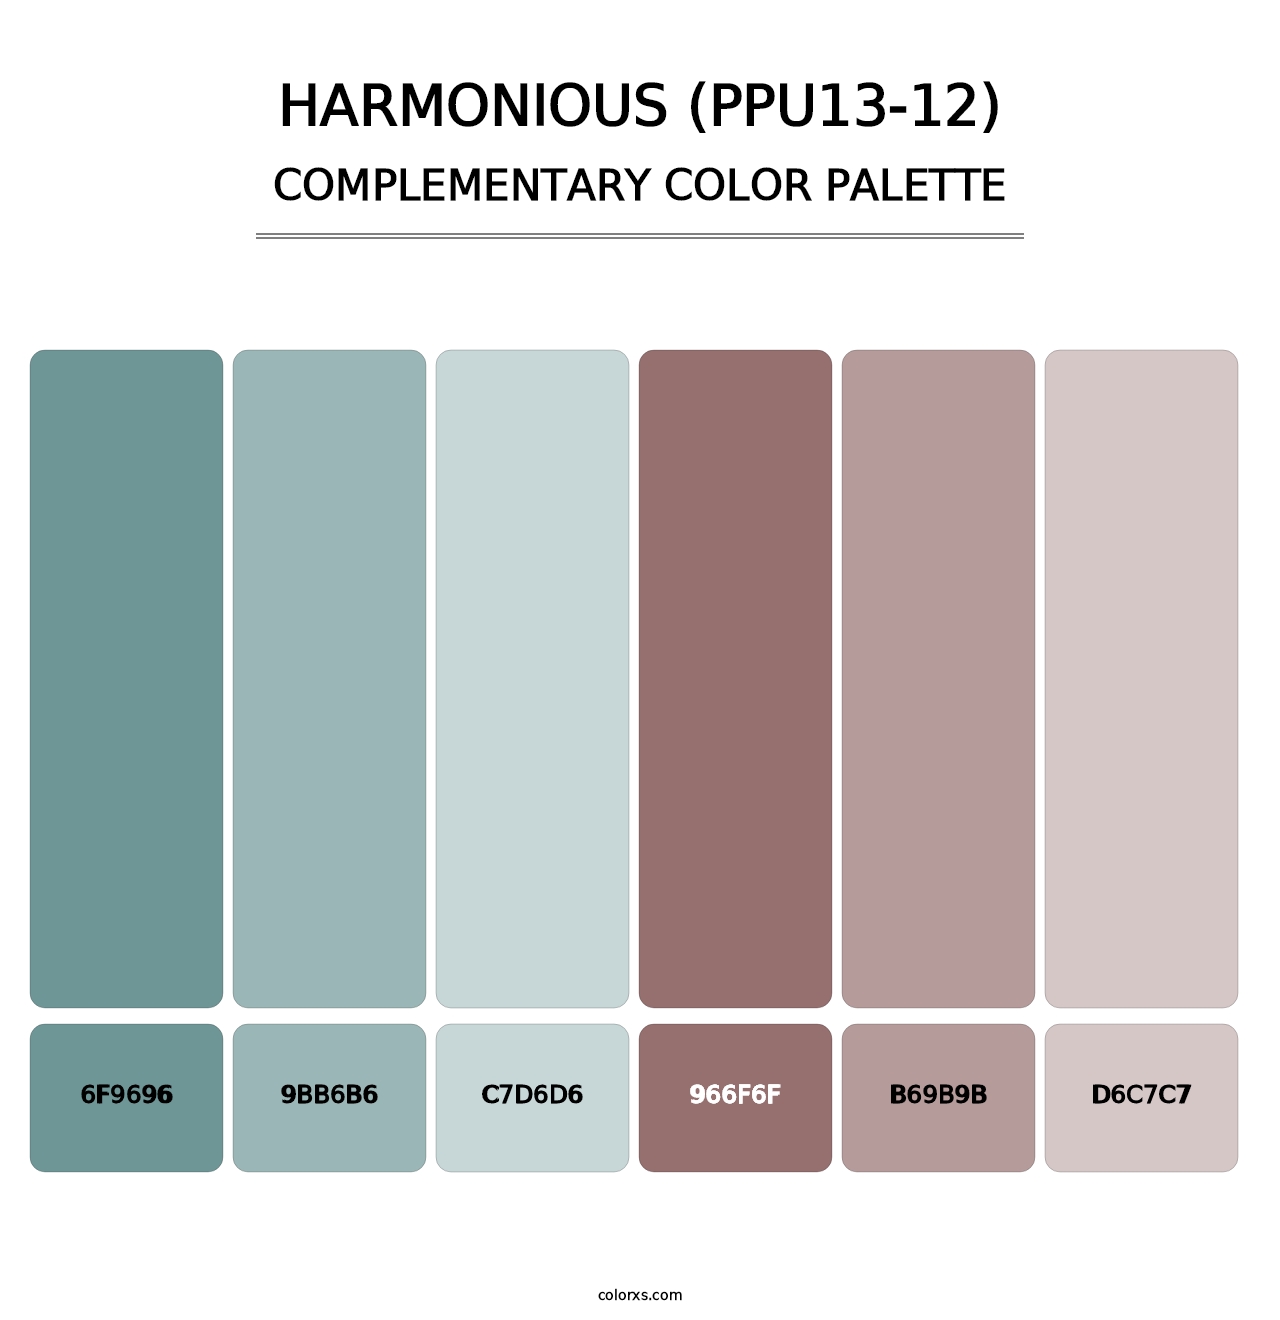 Harmonious (PPU13-12) - Complementary Color Palette